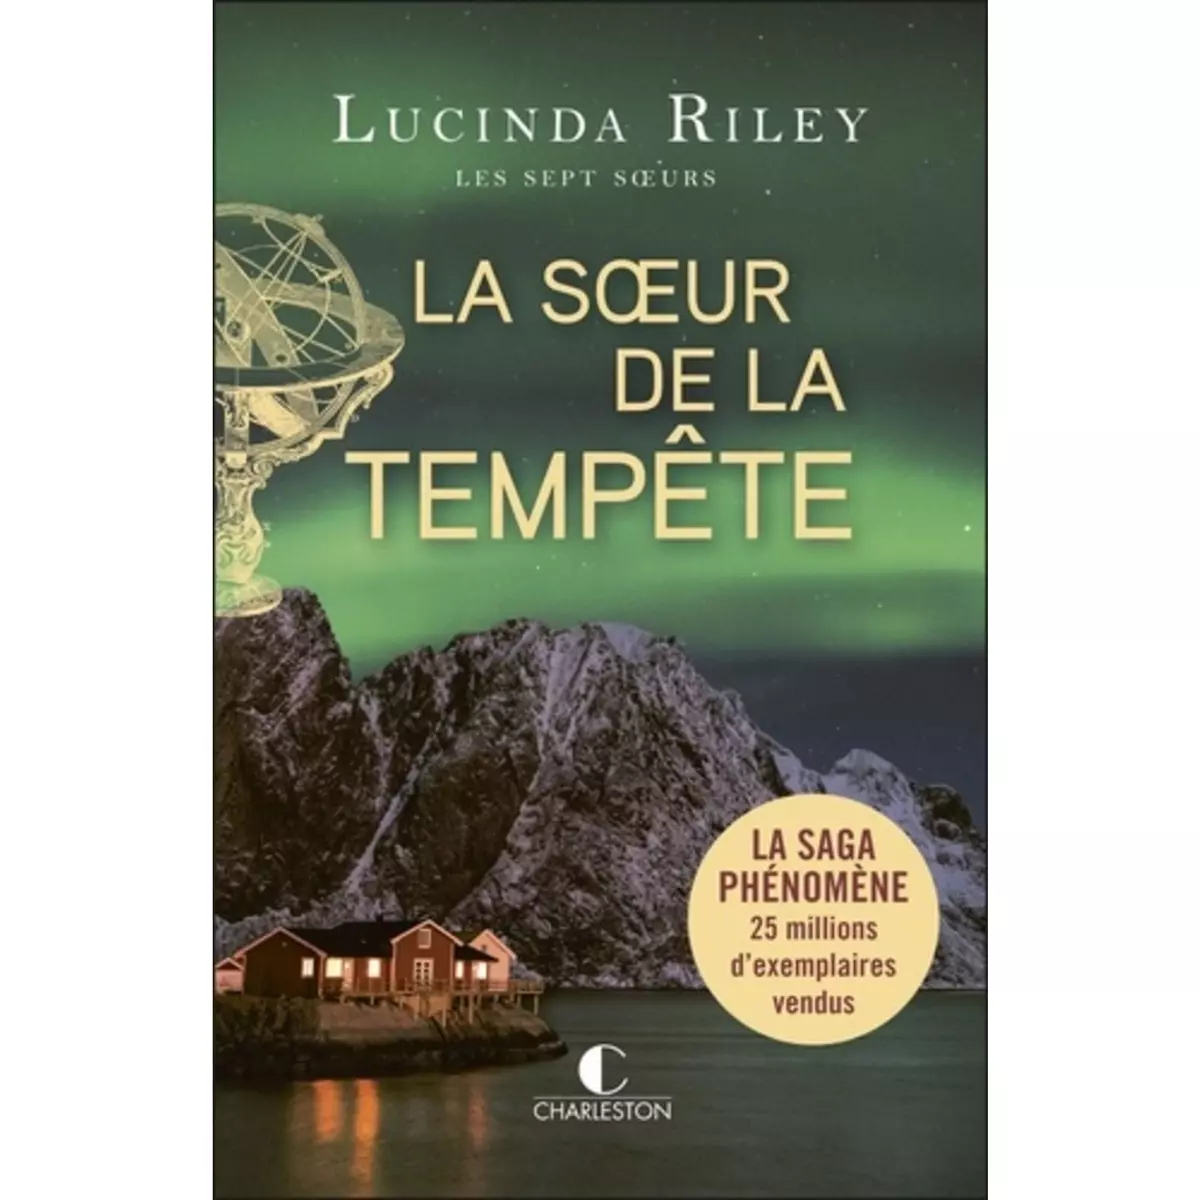  LES SEPT SOEURS TOME 2 : LA SOEUR DE LA TEMPETE. ALLY, Riley Lucinda